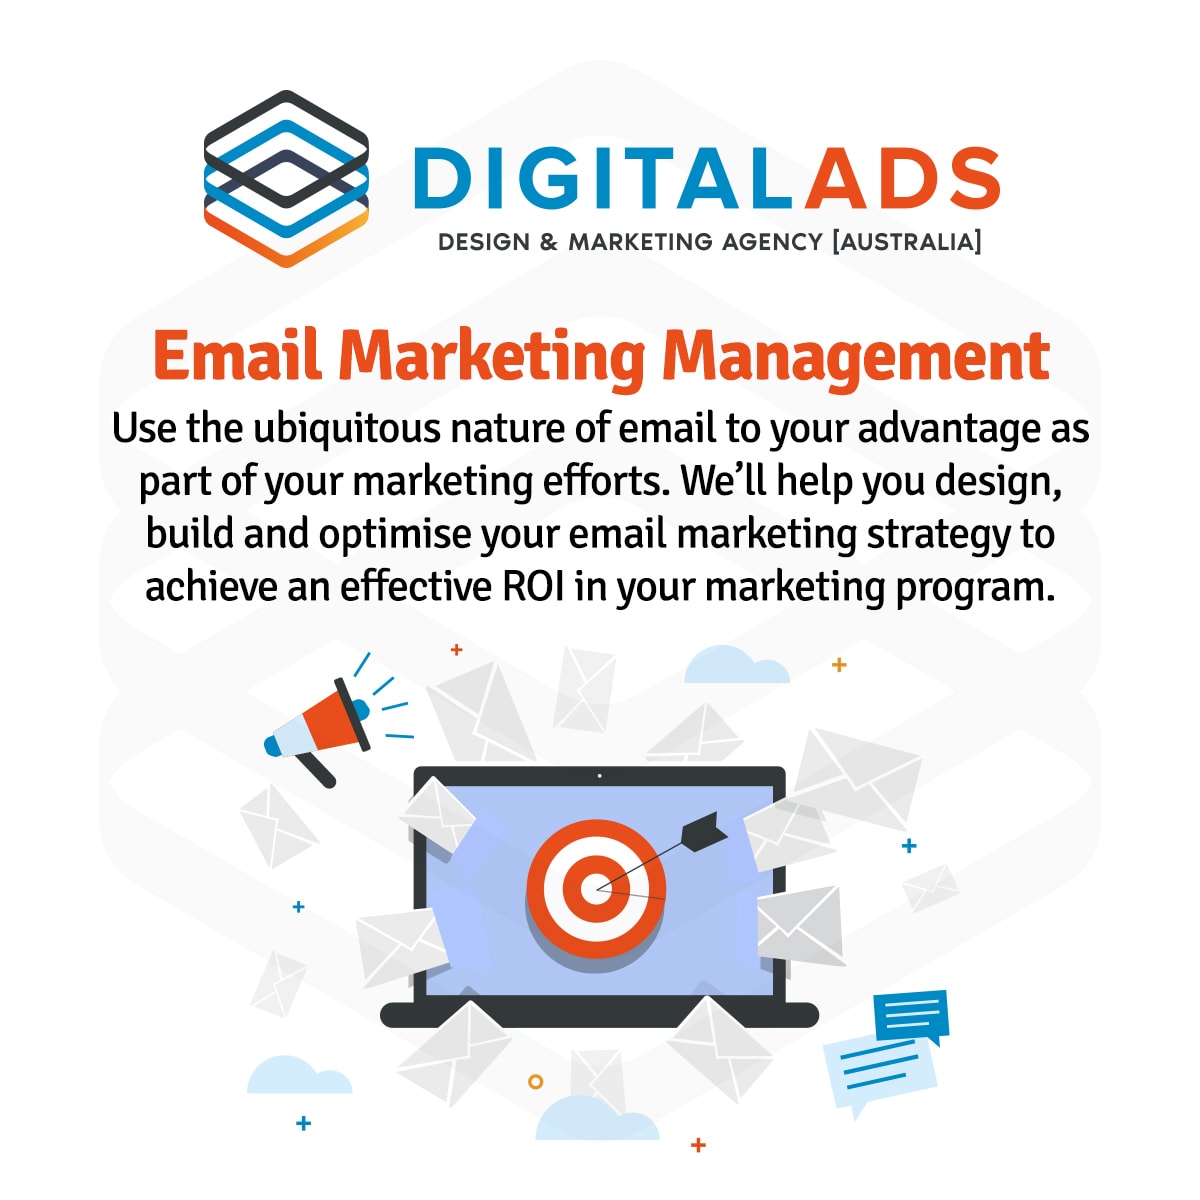 DigitalAds Preview Email Marketing Management Design Studio Marketing Agency Australia | Design, Advertising & Marketing Agency | DigitalAds [Australia]